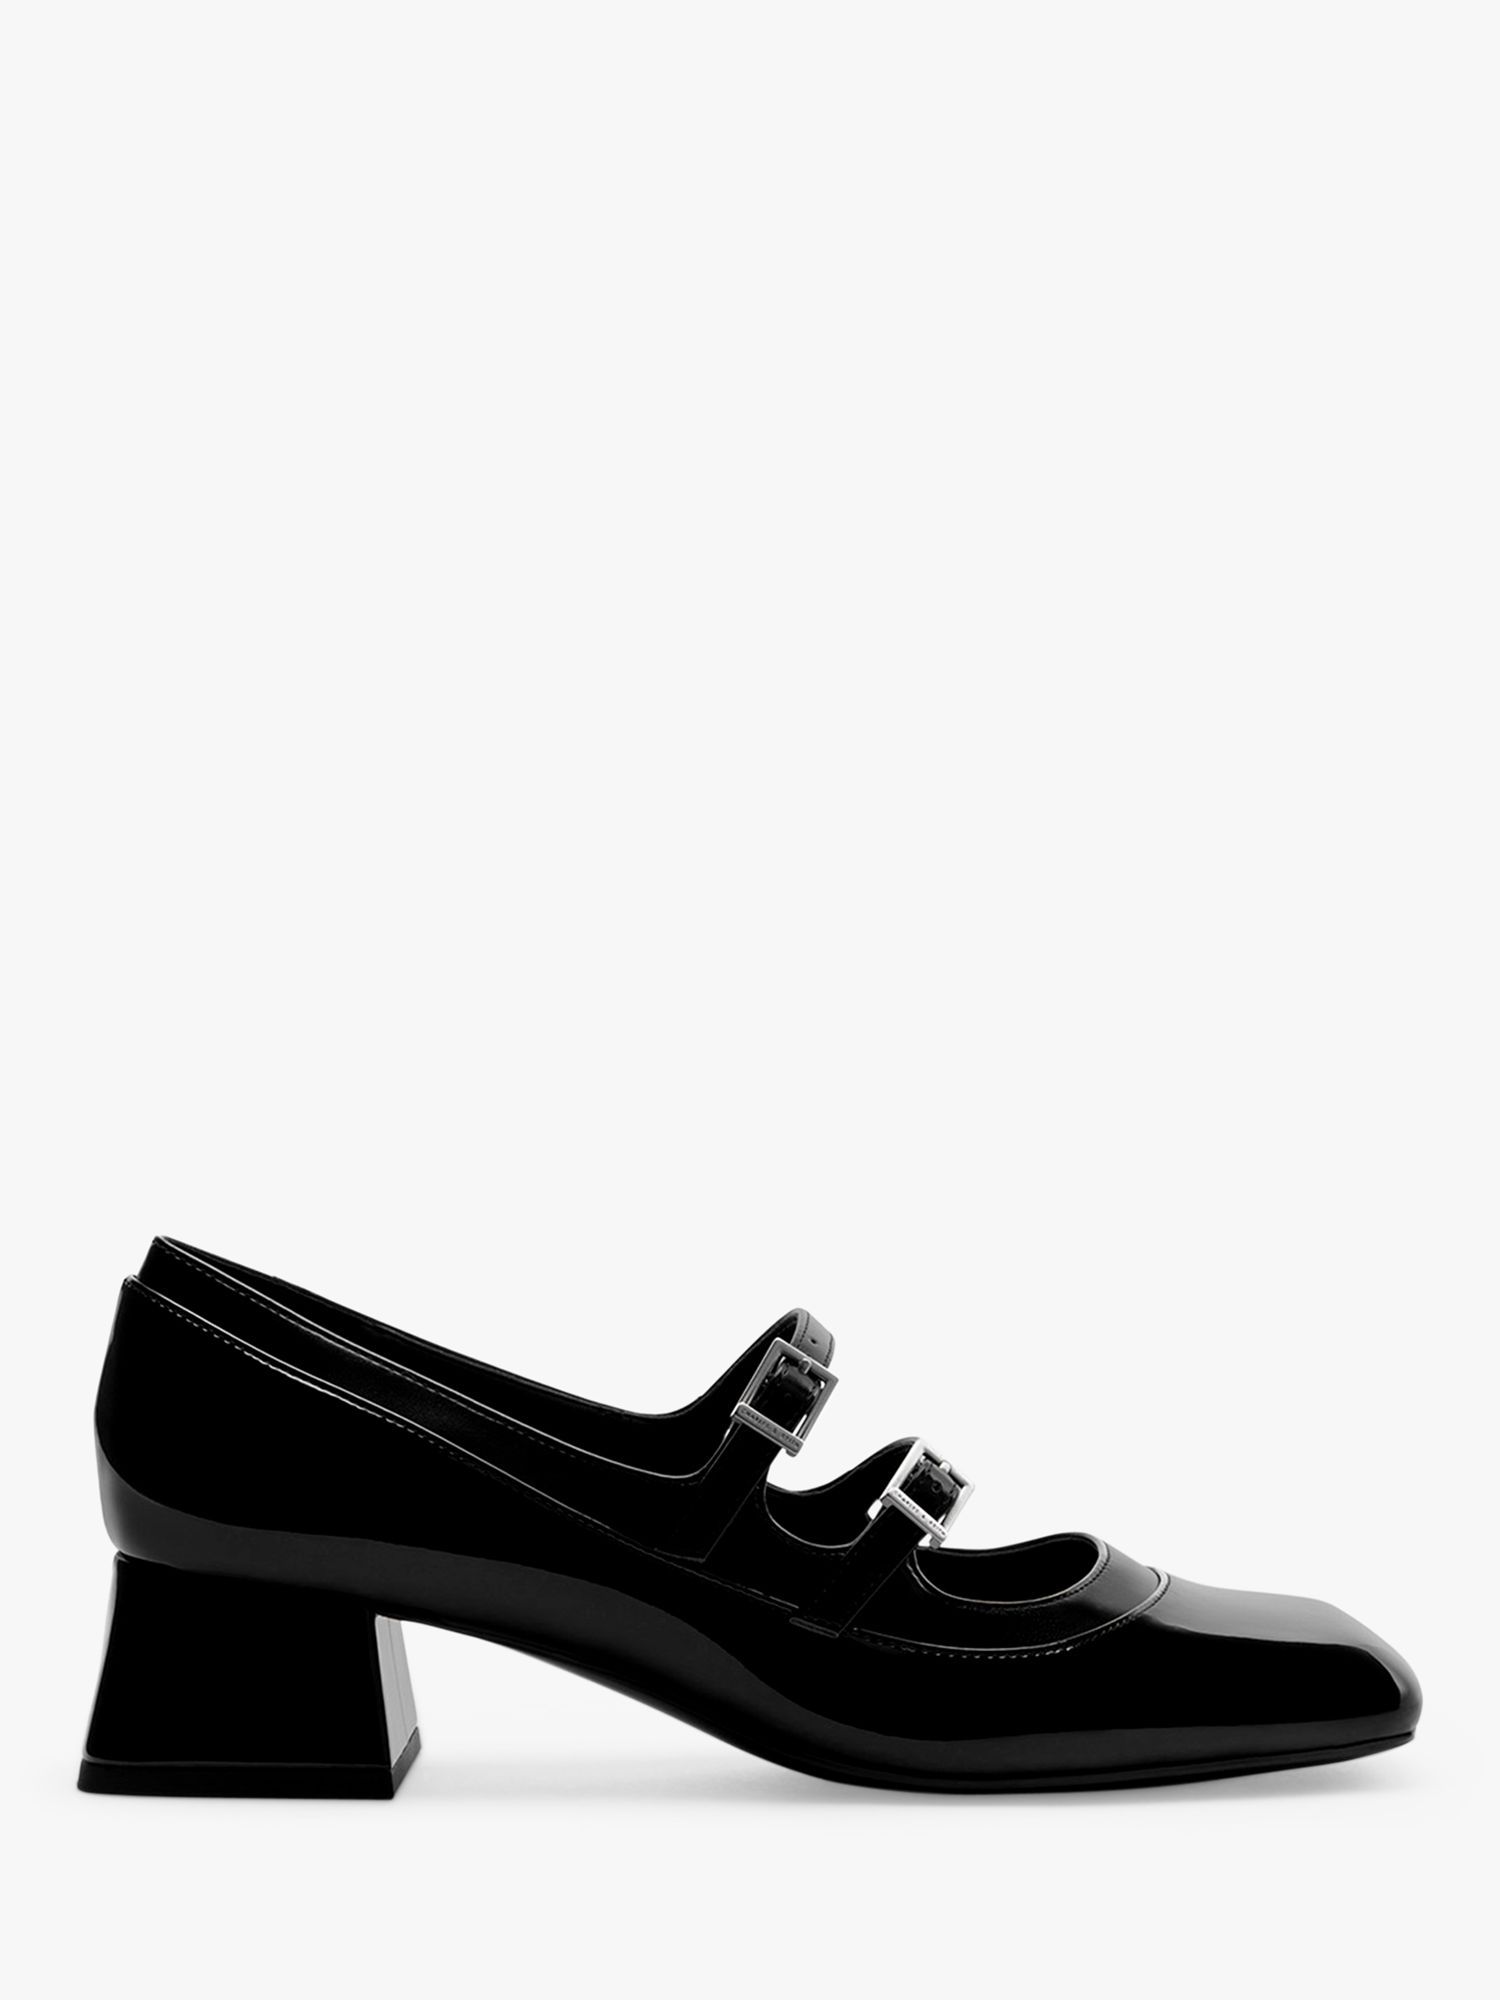 CHARLES & KEITH Patent Mary Jane Shoes, Black | John Lewis (UK)